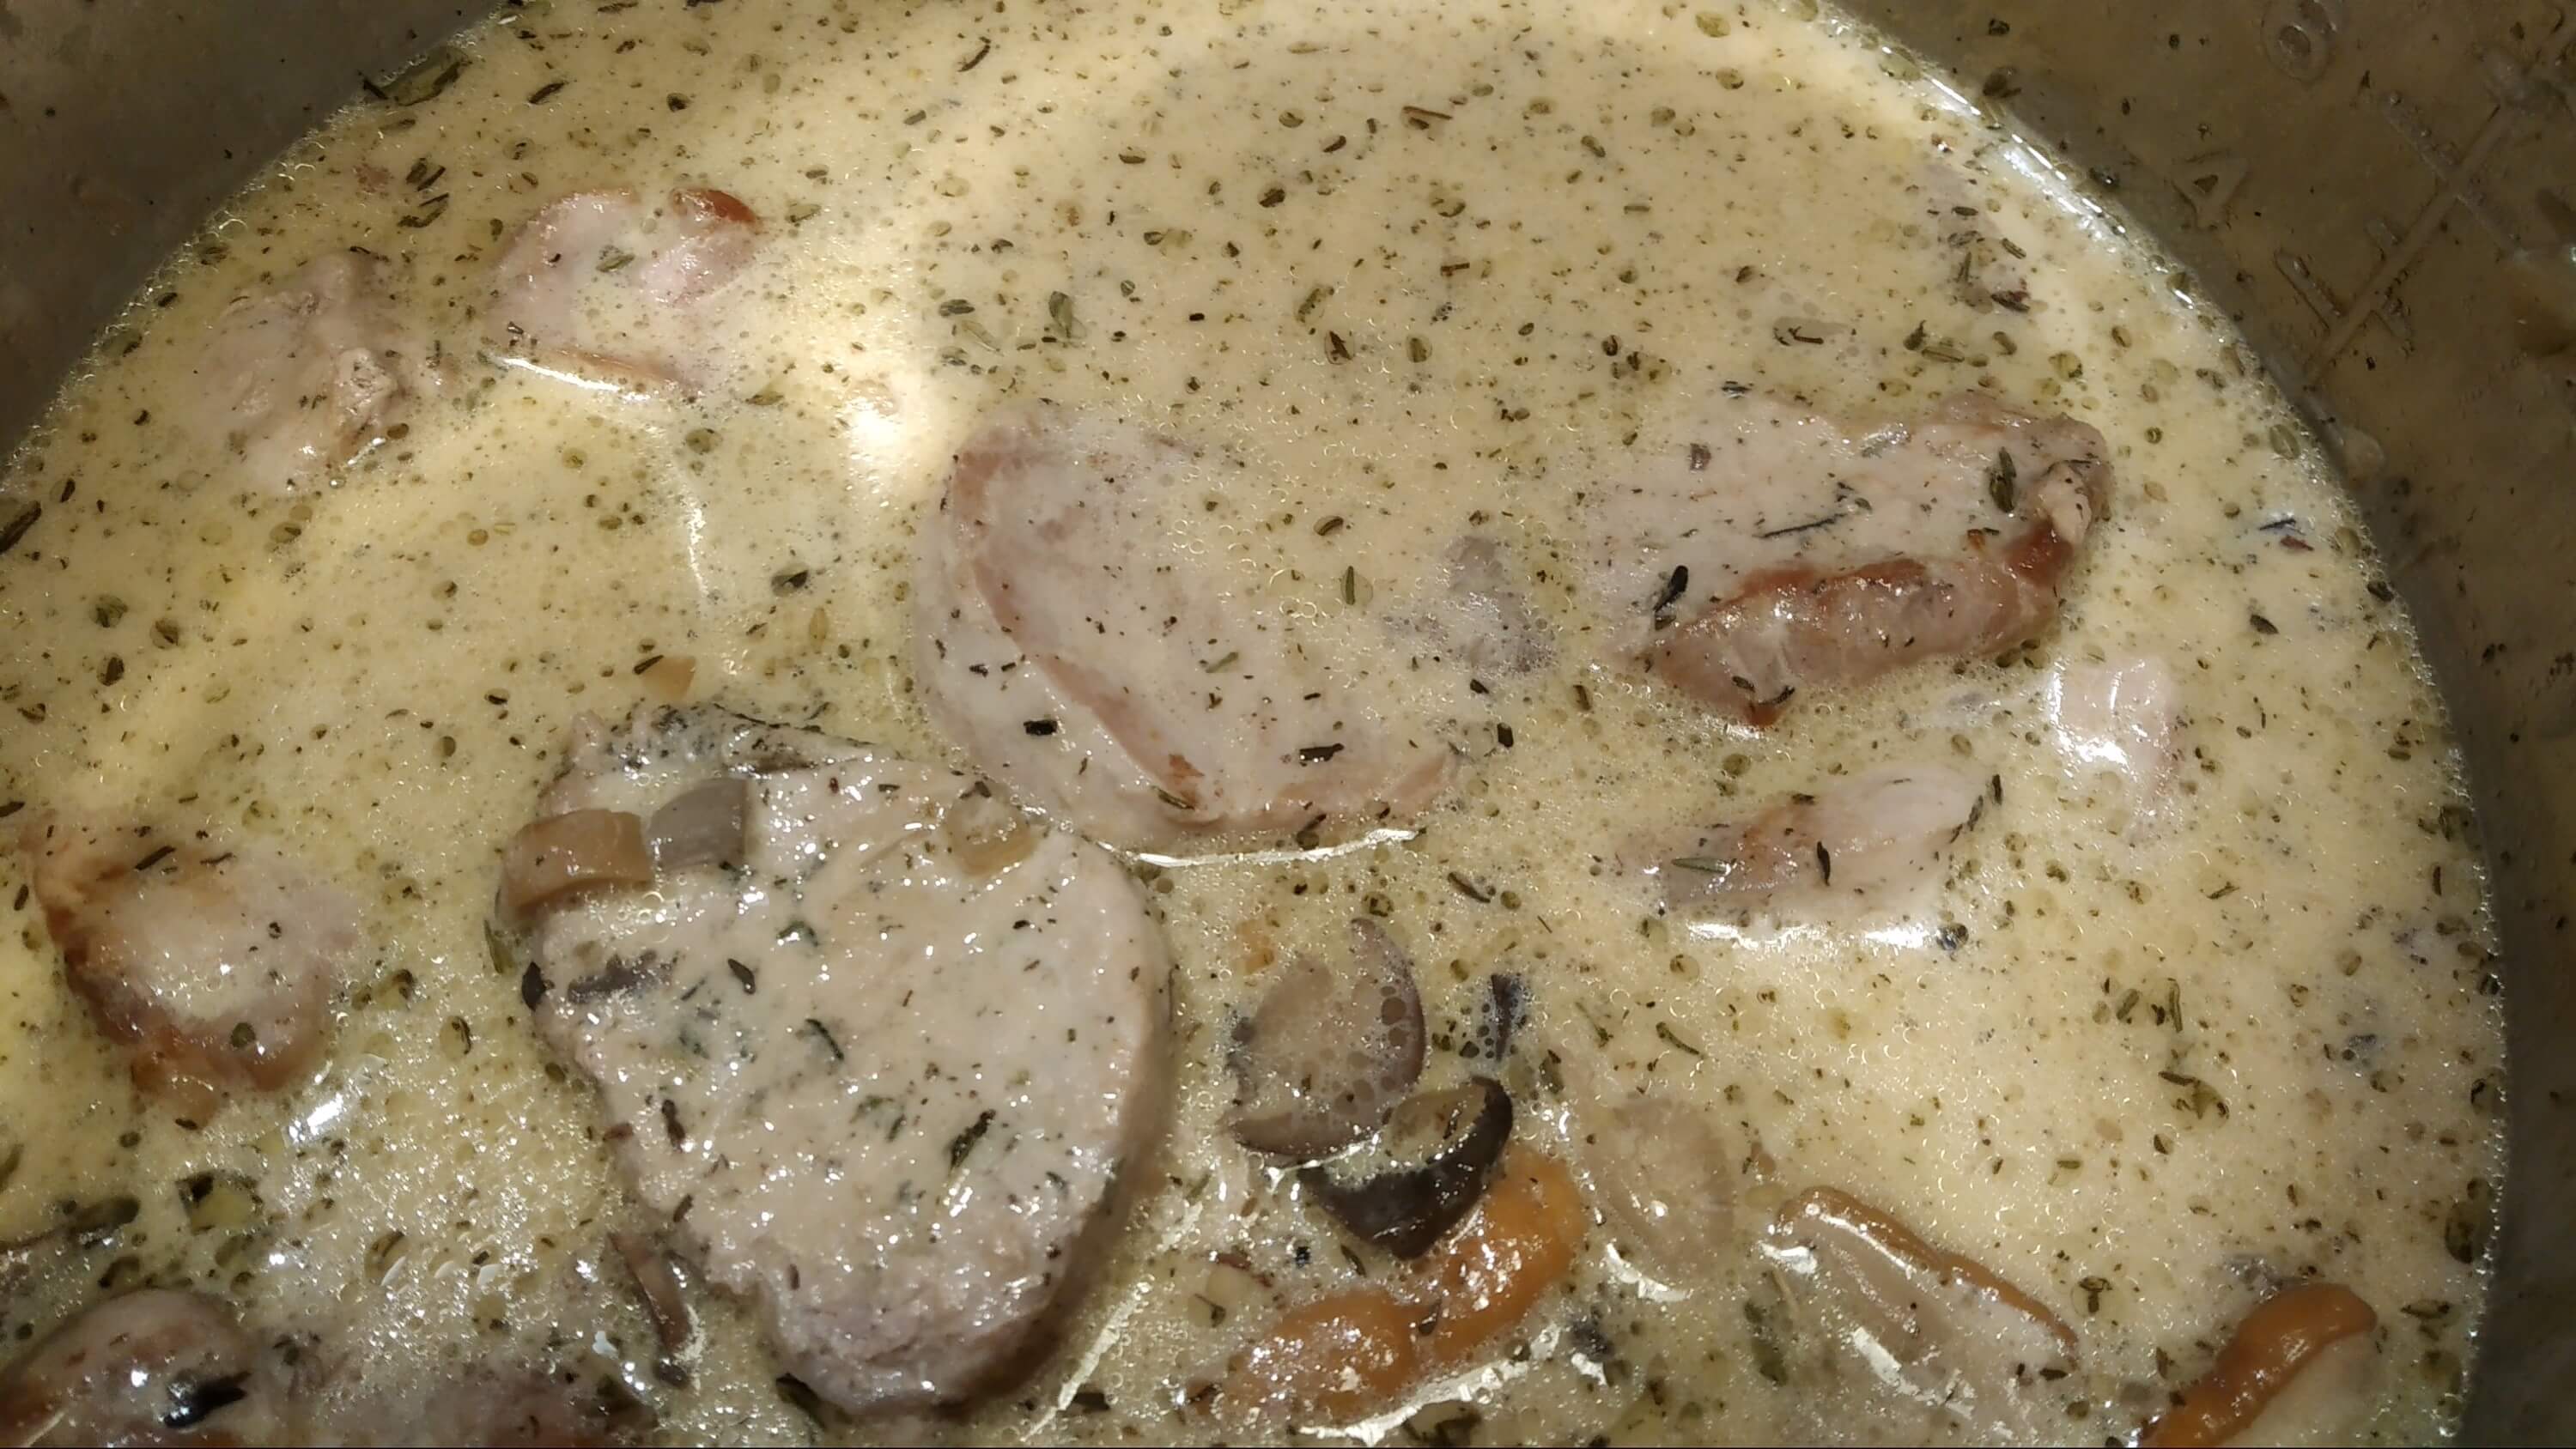 pork tenderloins wild mushrooms and other ingredients inside instant pot